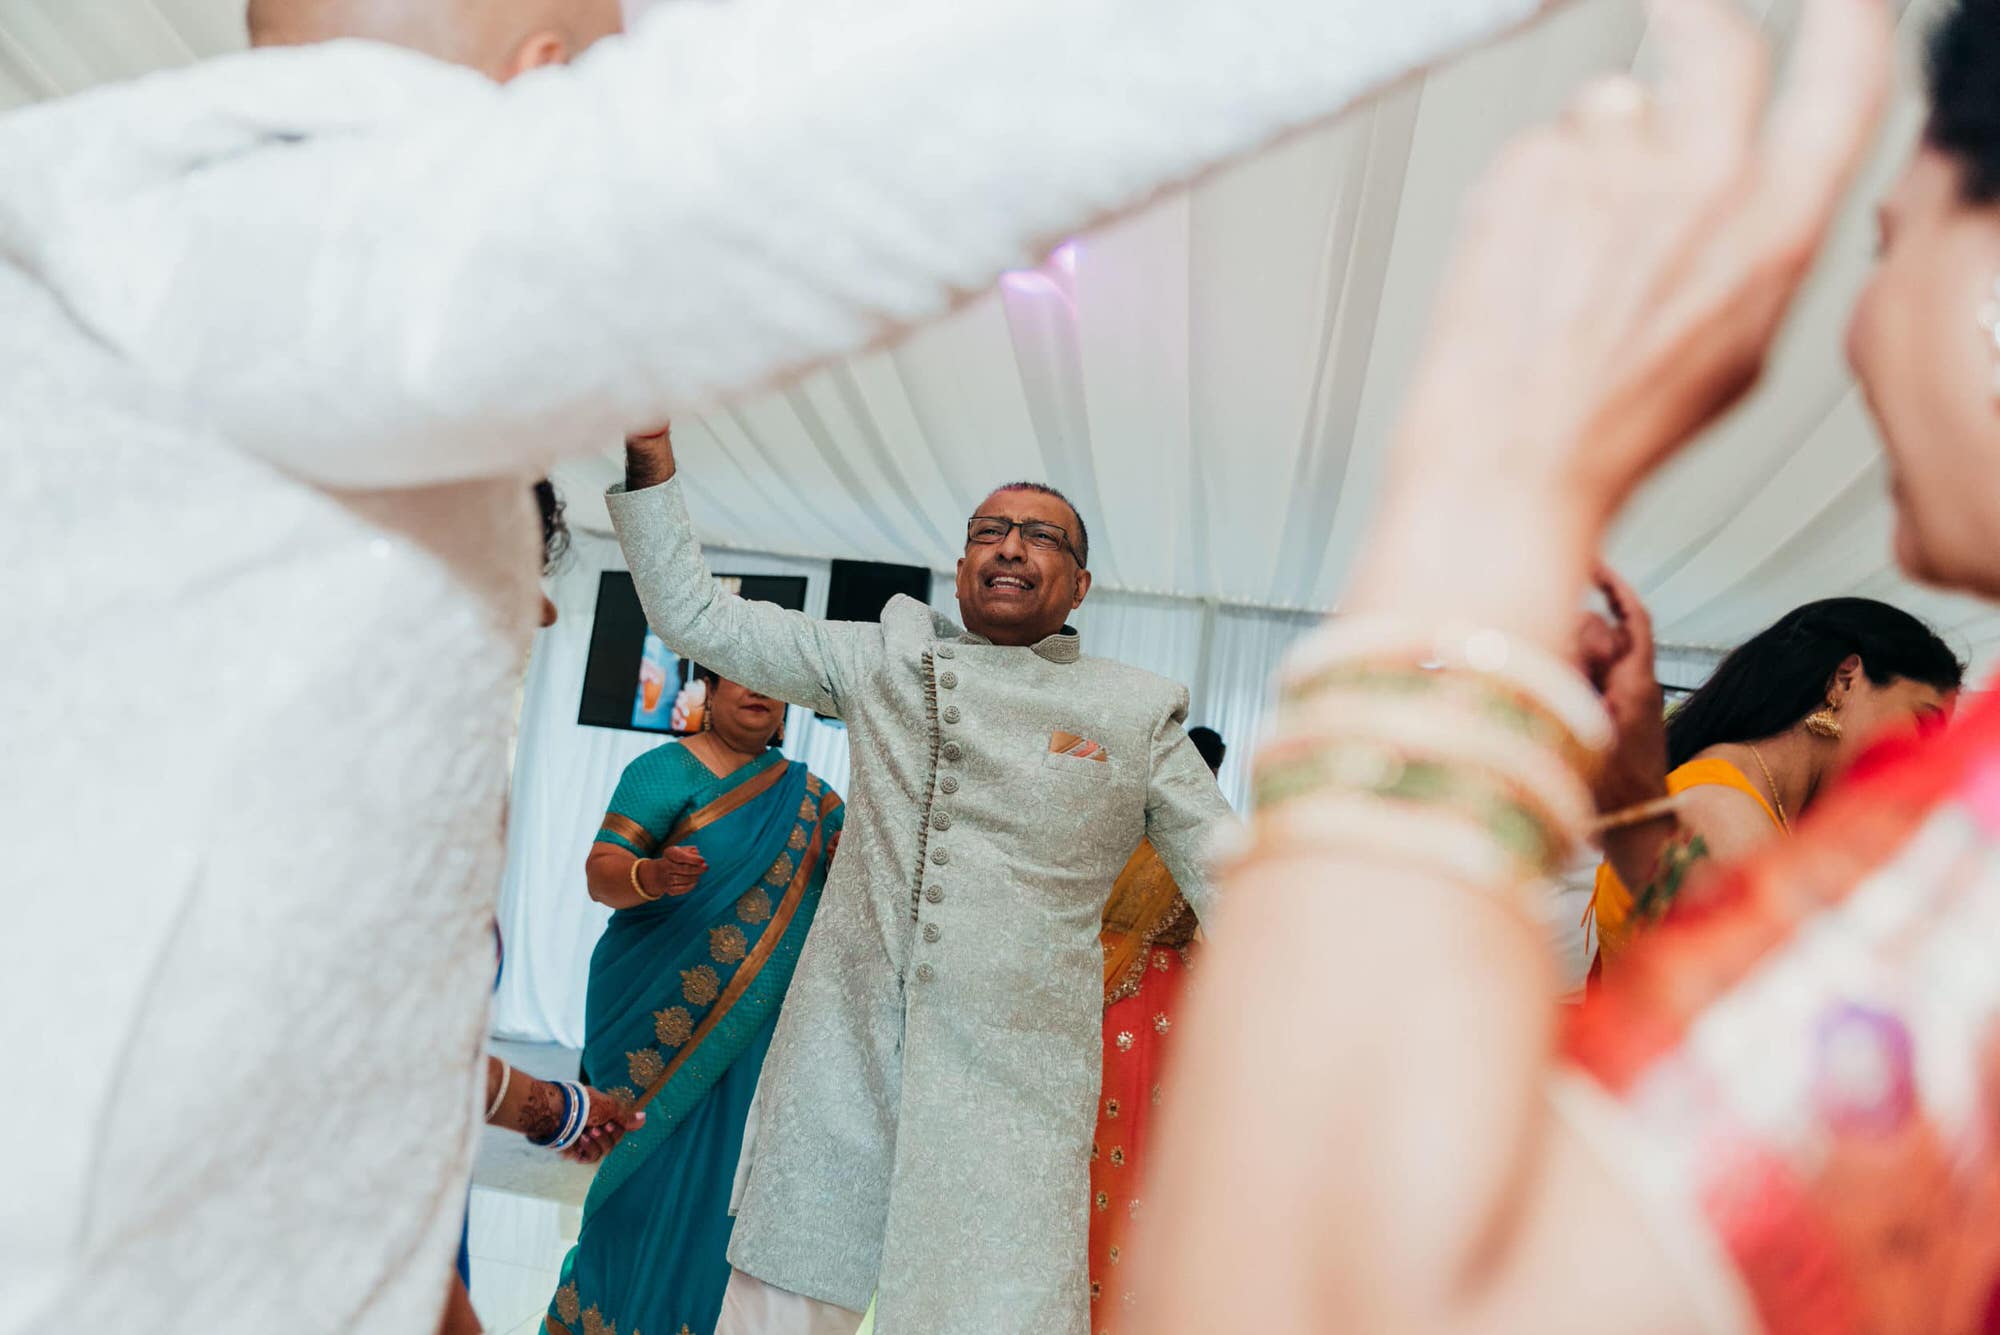 north-mymms-hatfield-wedding-venue-hindu-roshni-photography-guest-dancing